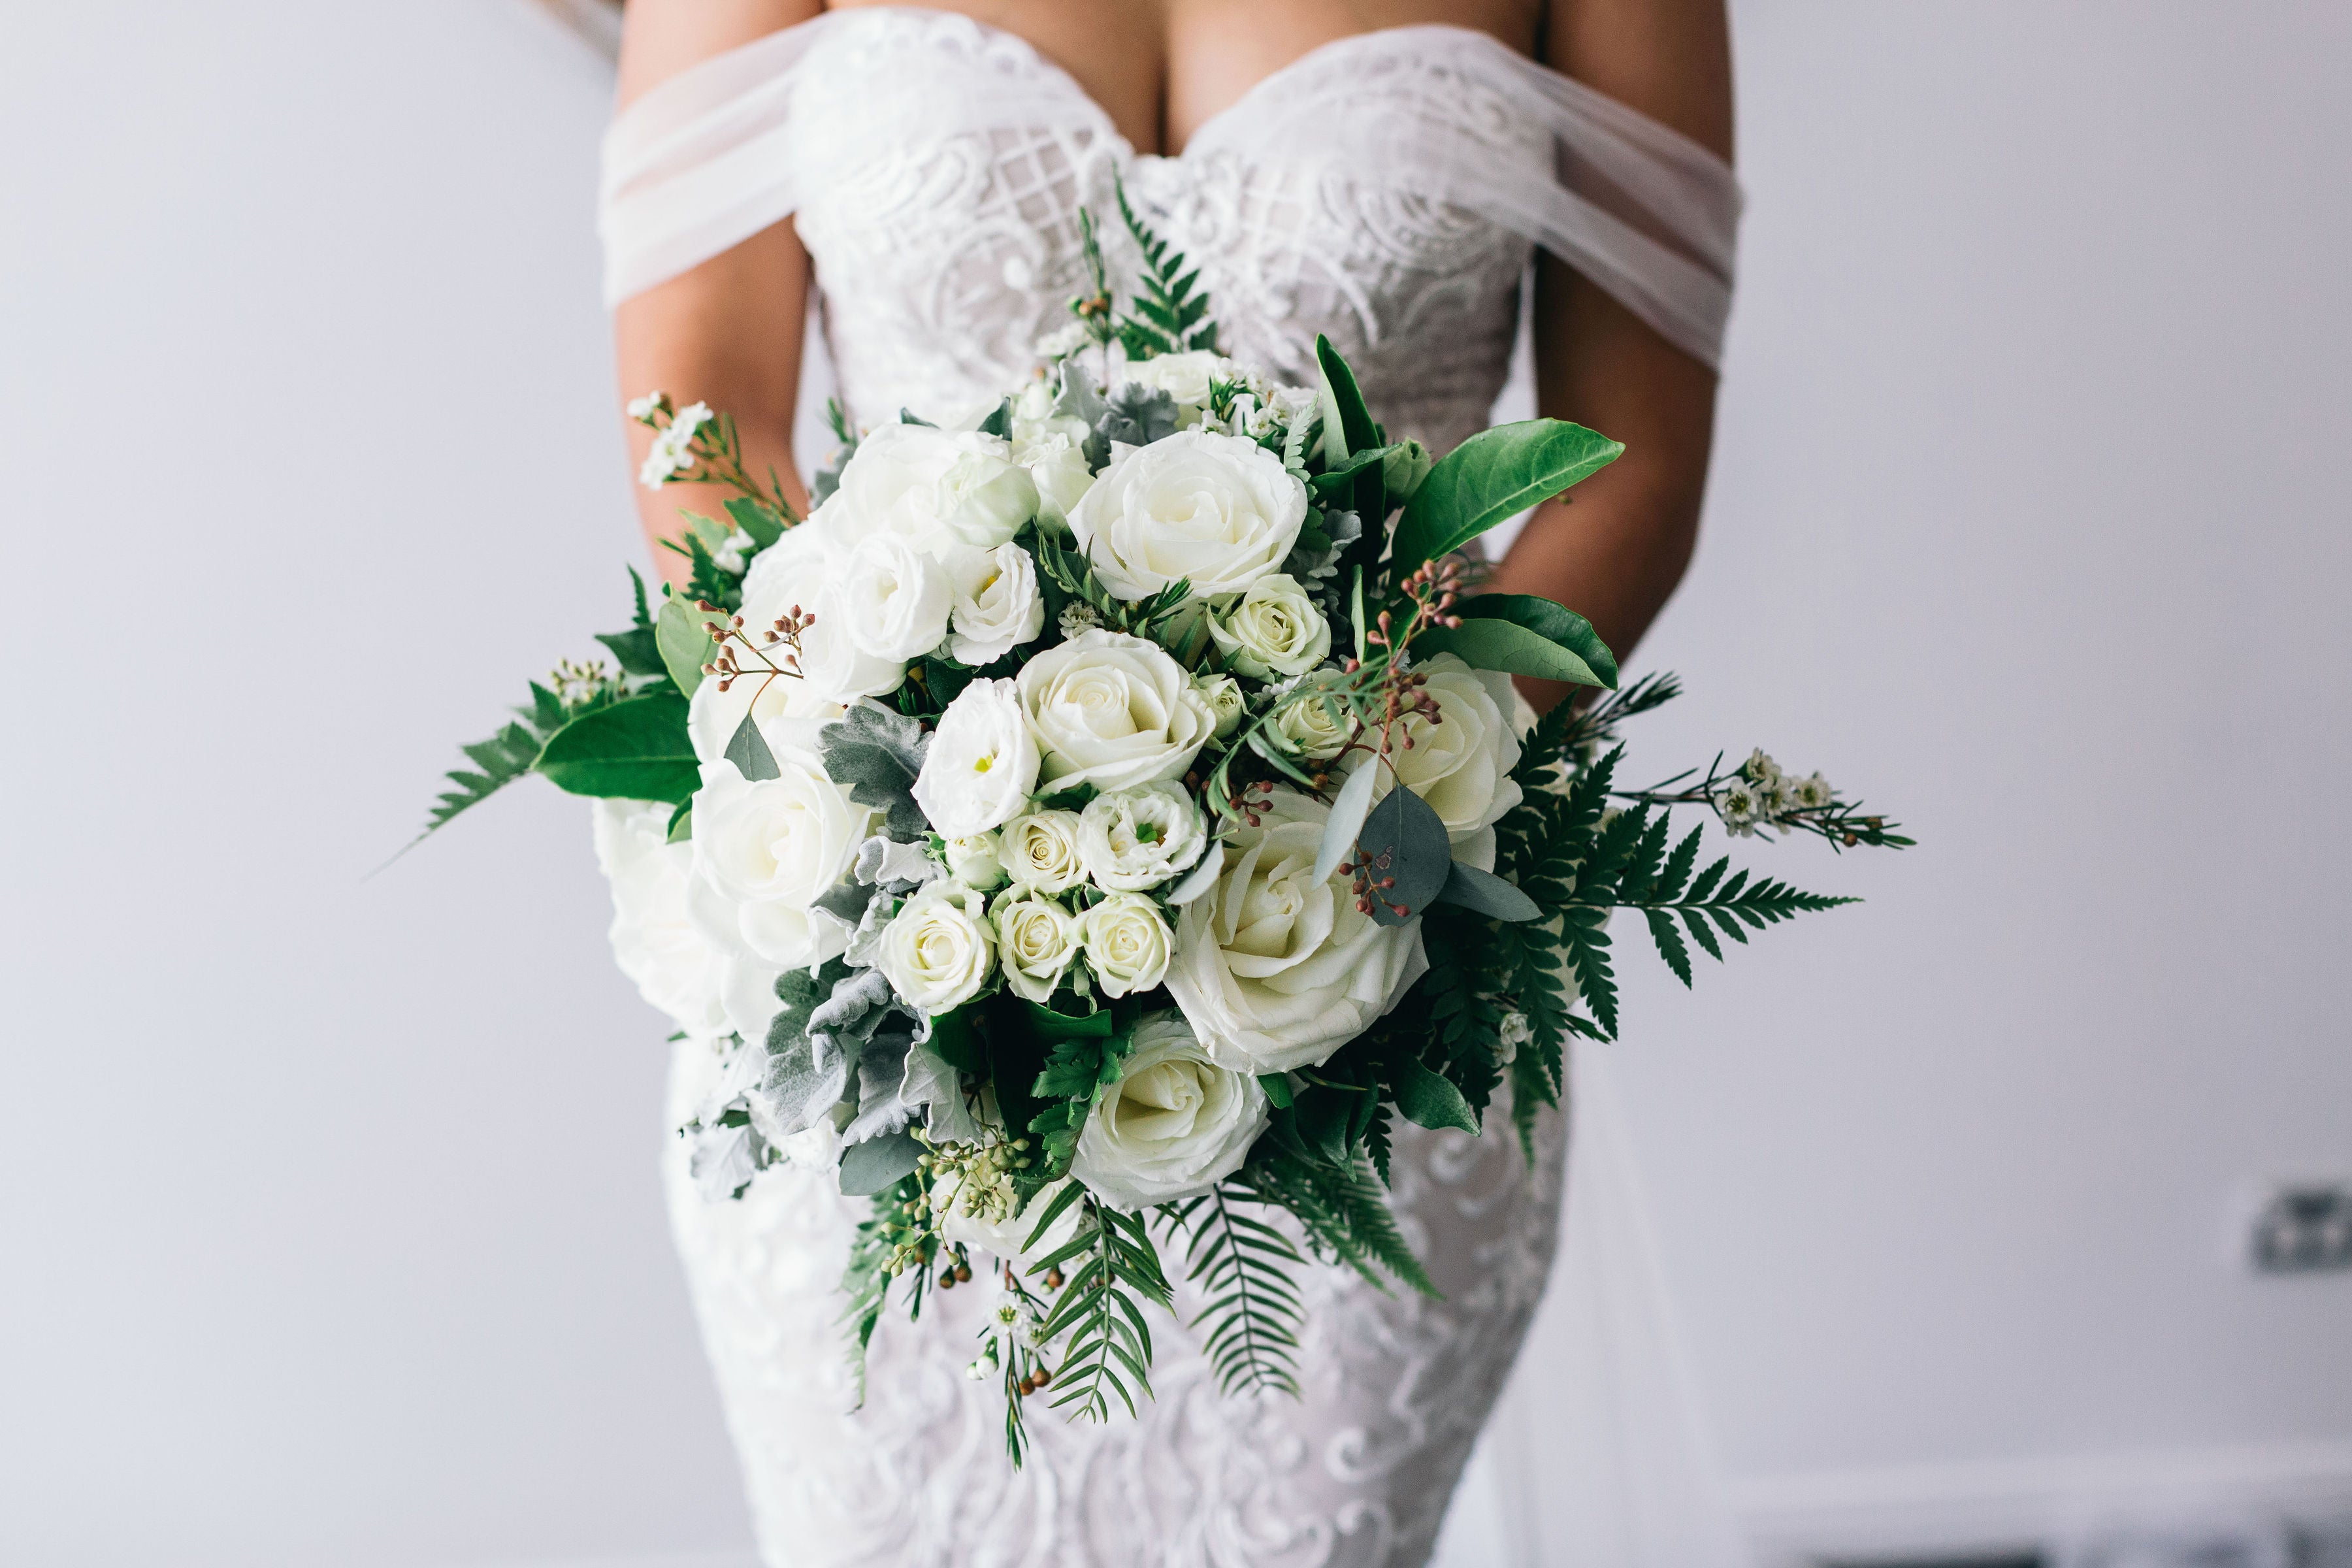 bride wearing wedding dress holding bouquet of flowers